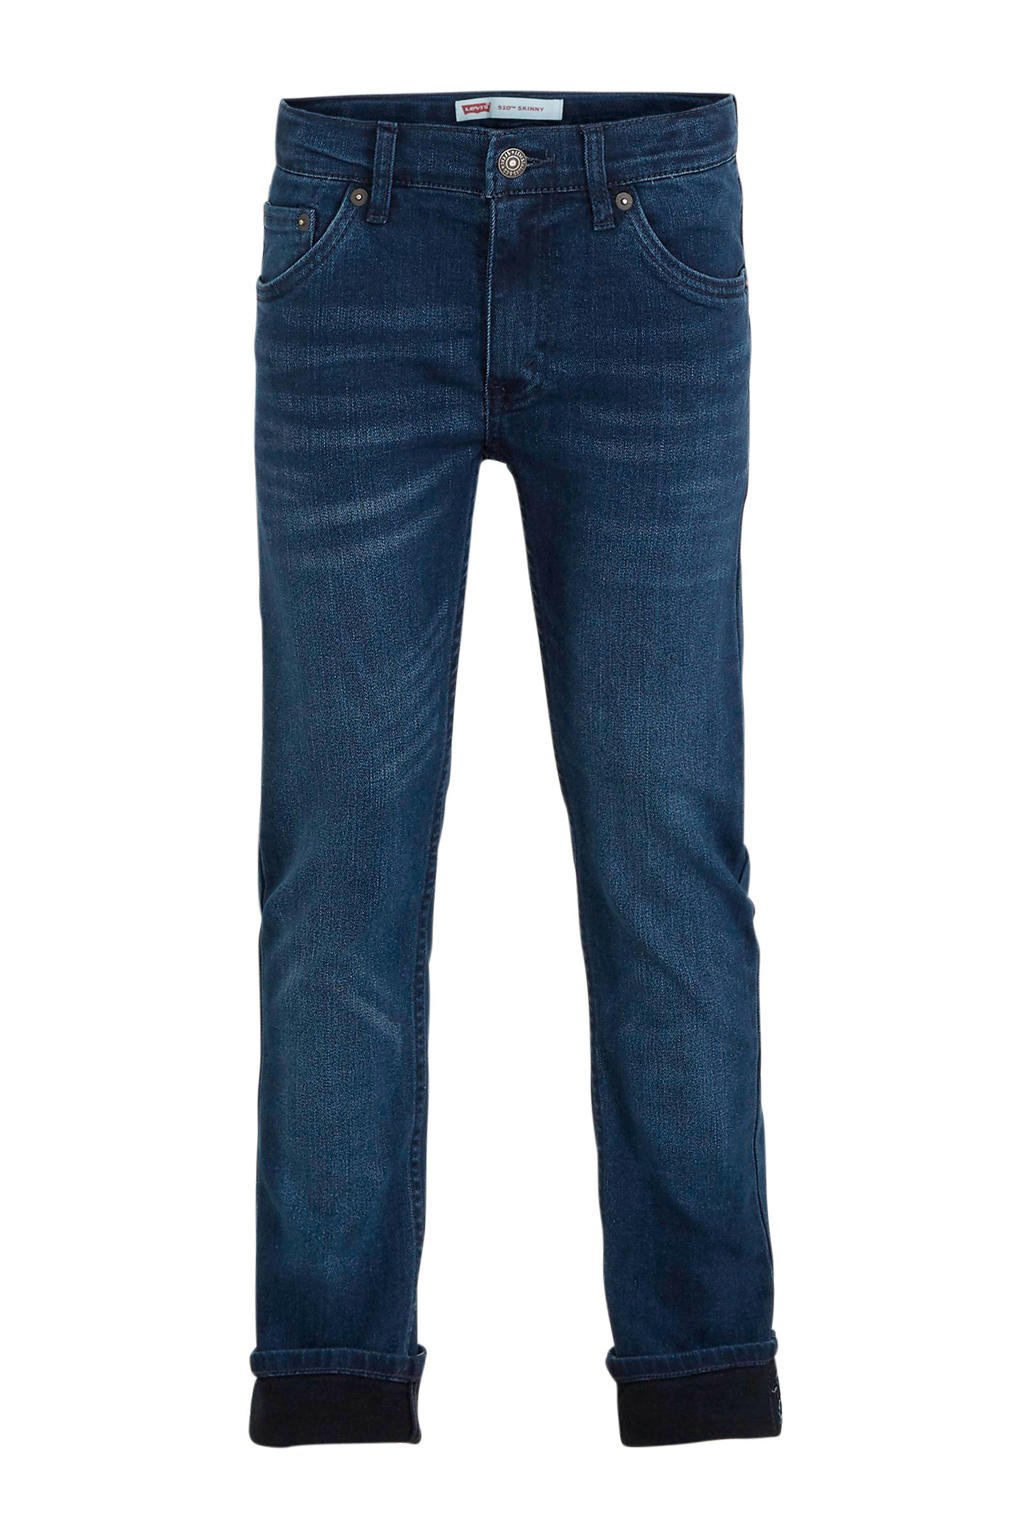 Levi's Kids 510 skinny jeans dark denim